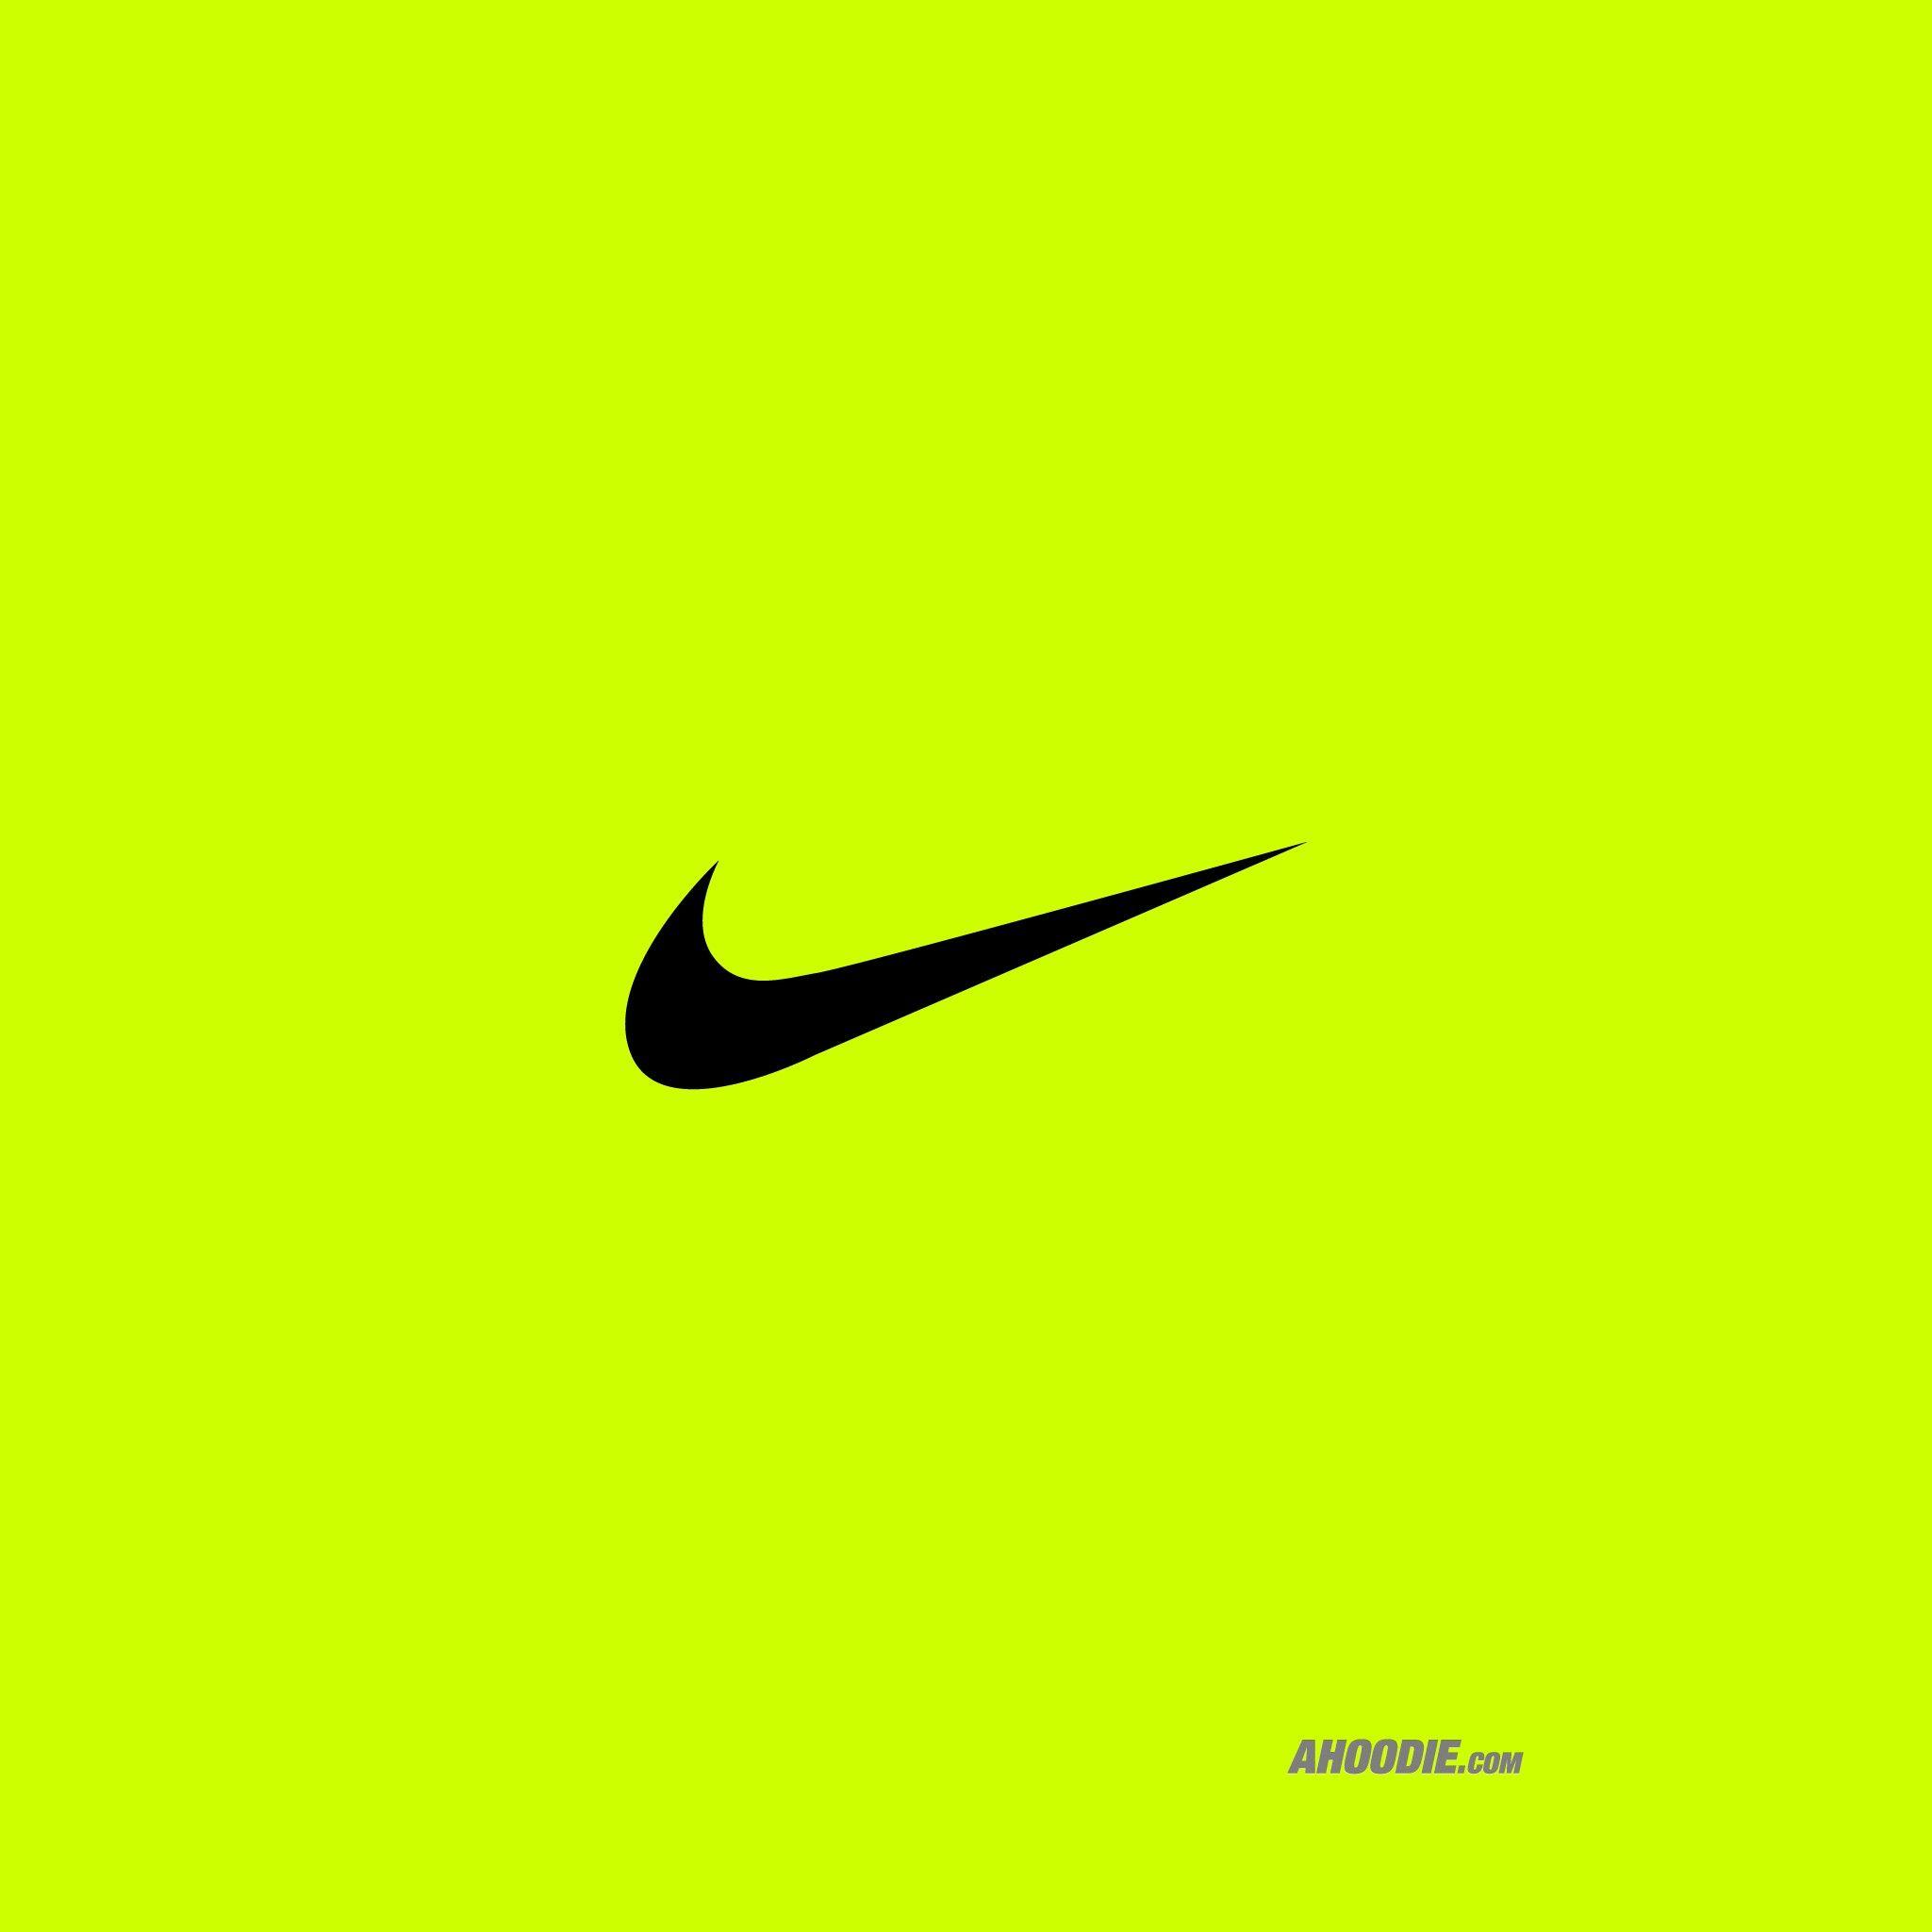 Neon Nike Logo - Ahoodie | Nike swoosh